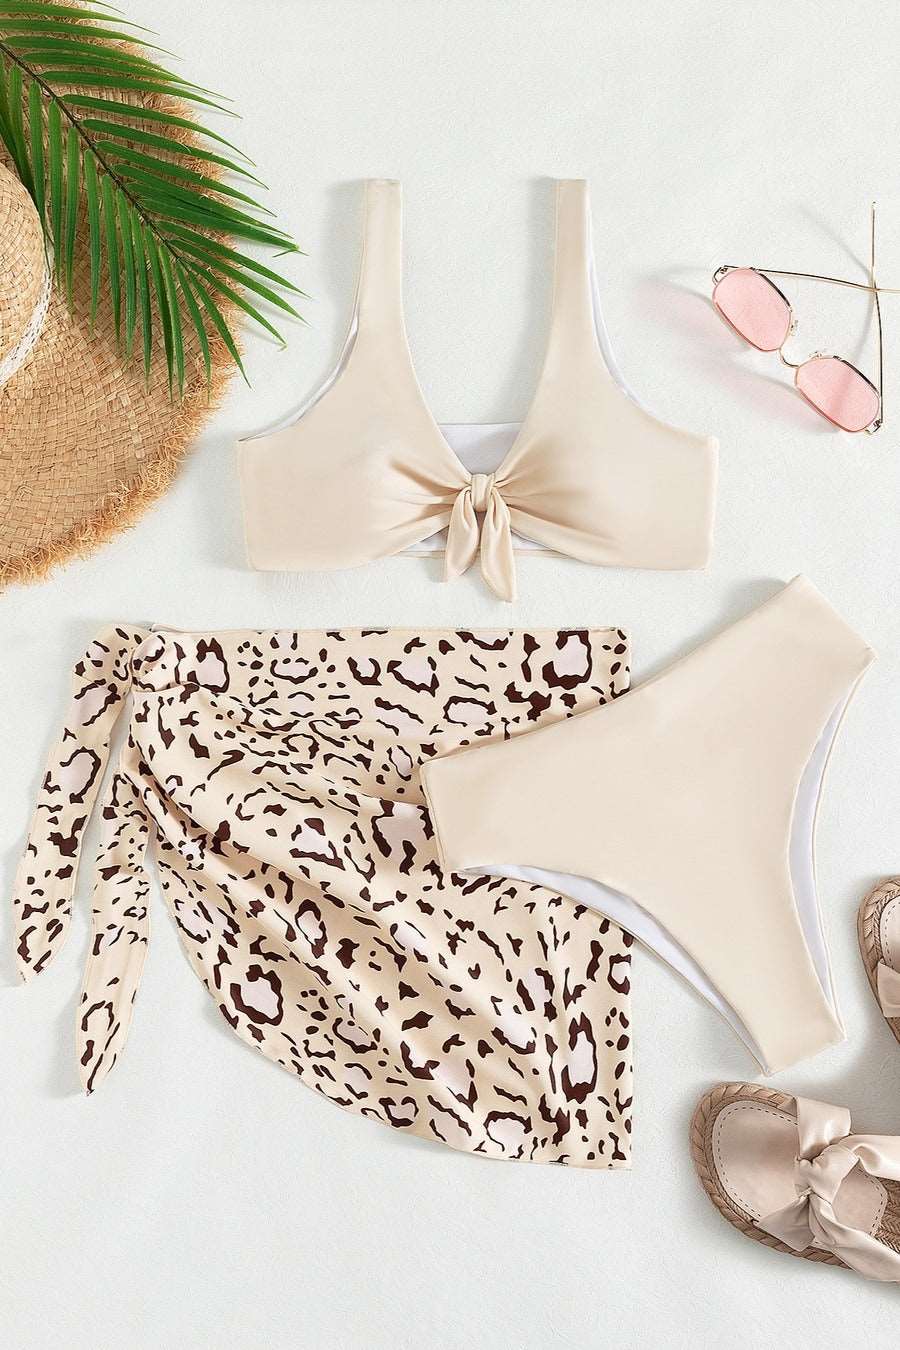 Beach Babe Leopard Print Bikini Set